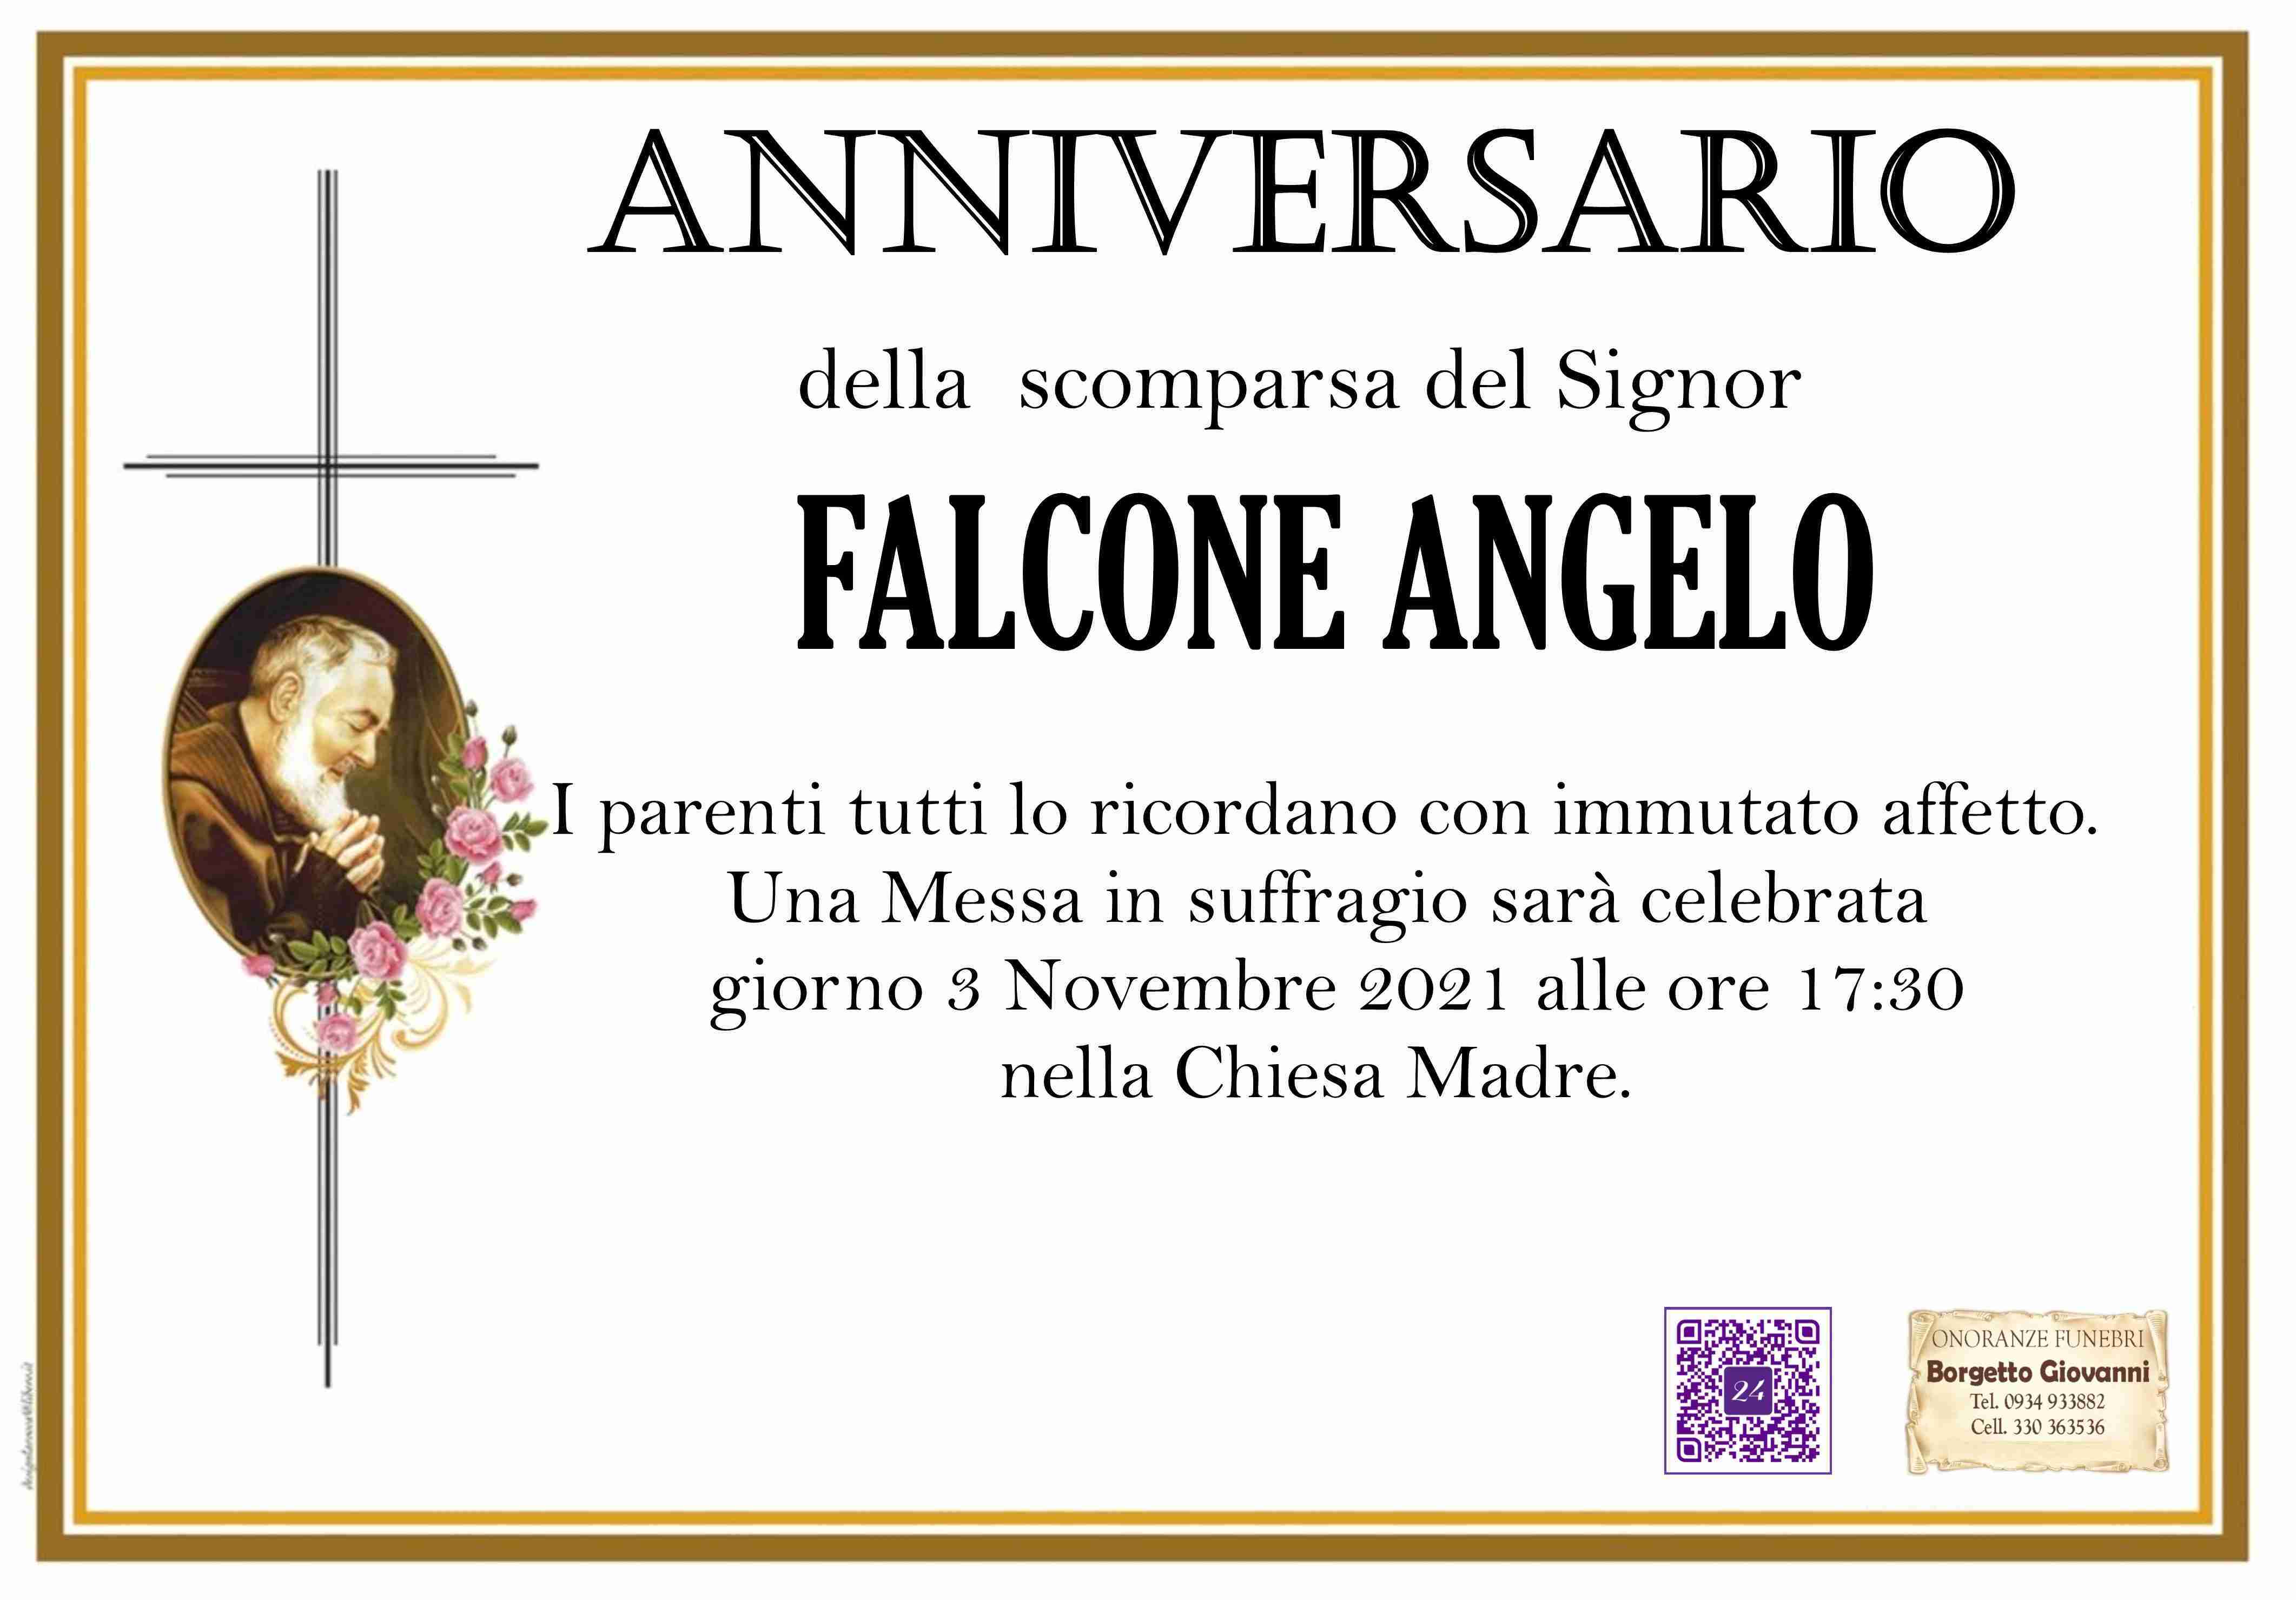 Angelo Falcone